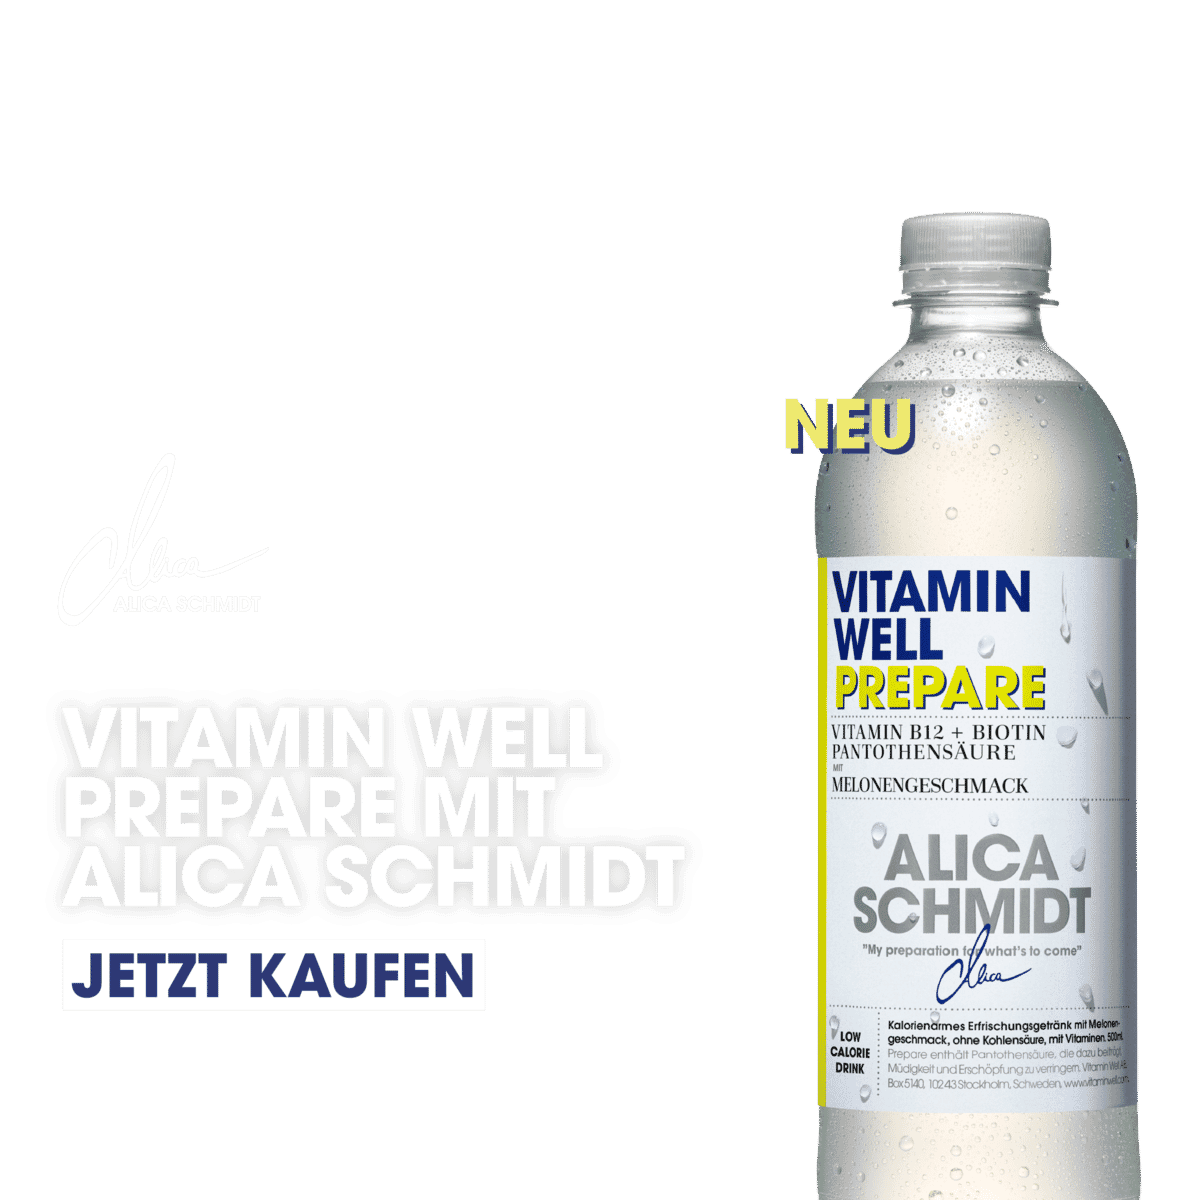 Vitamin Well